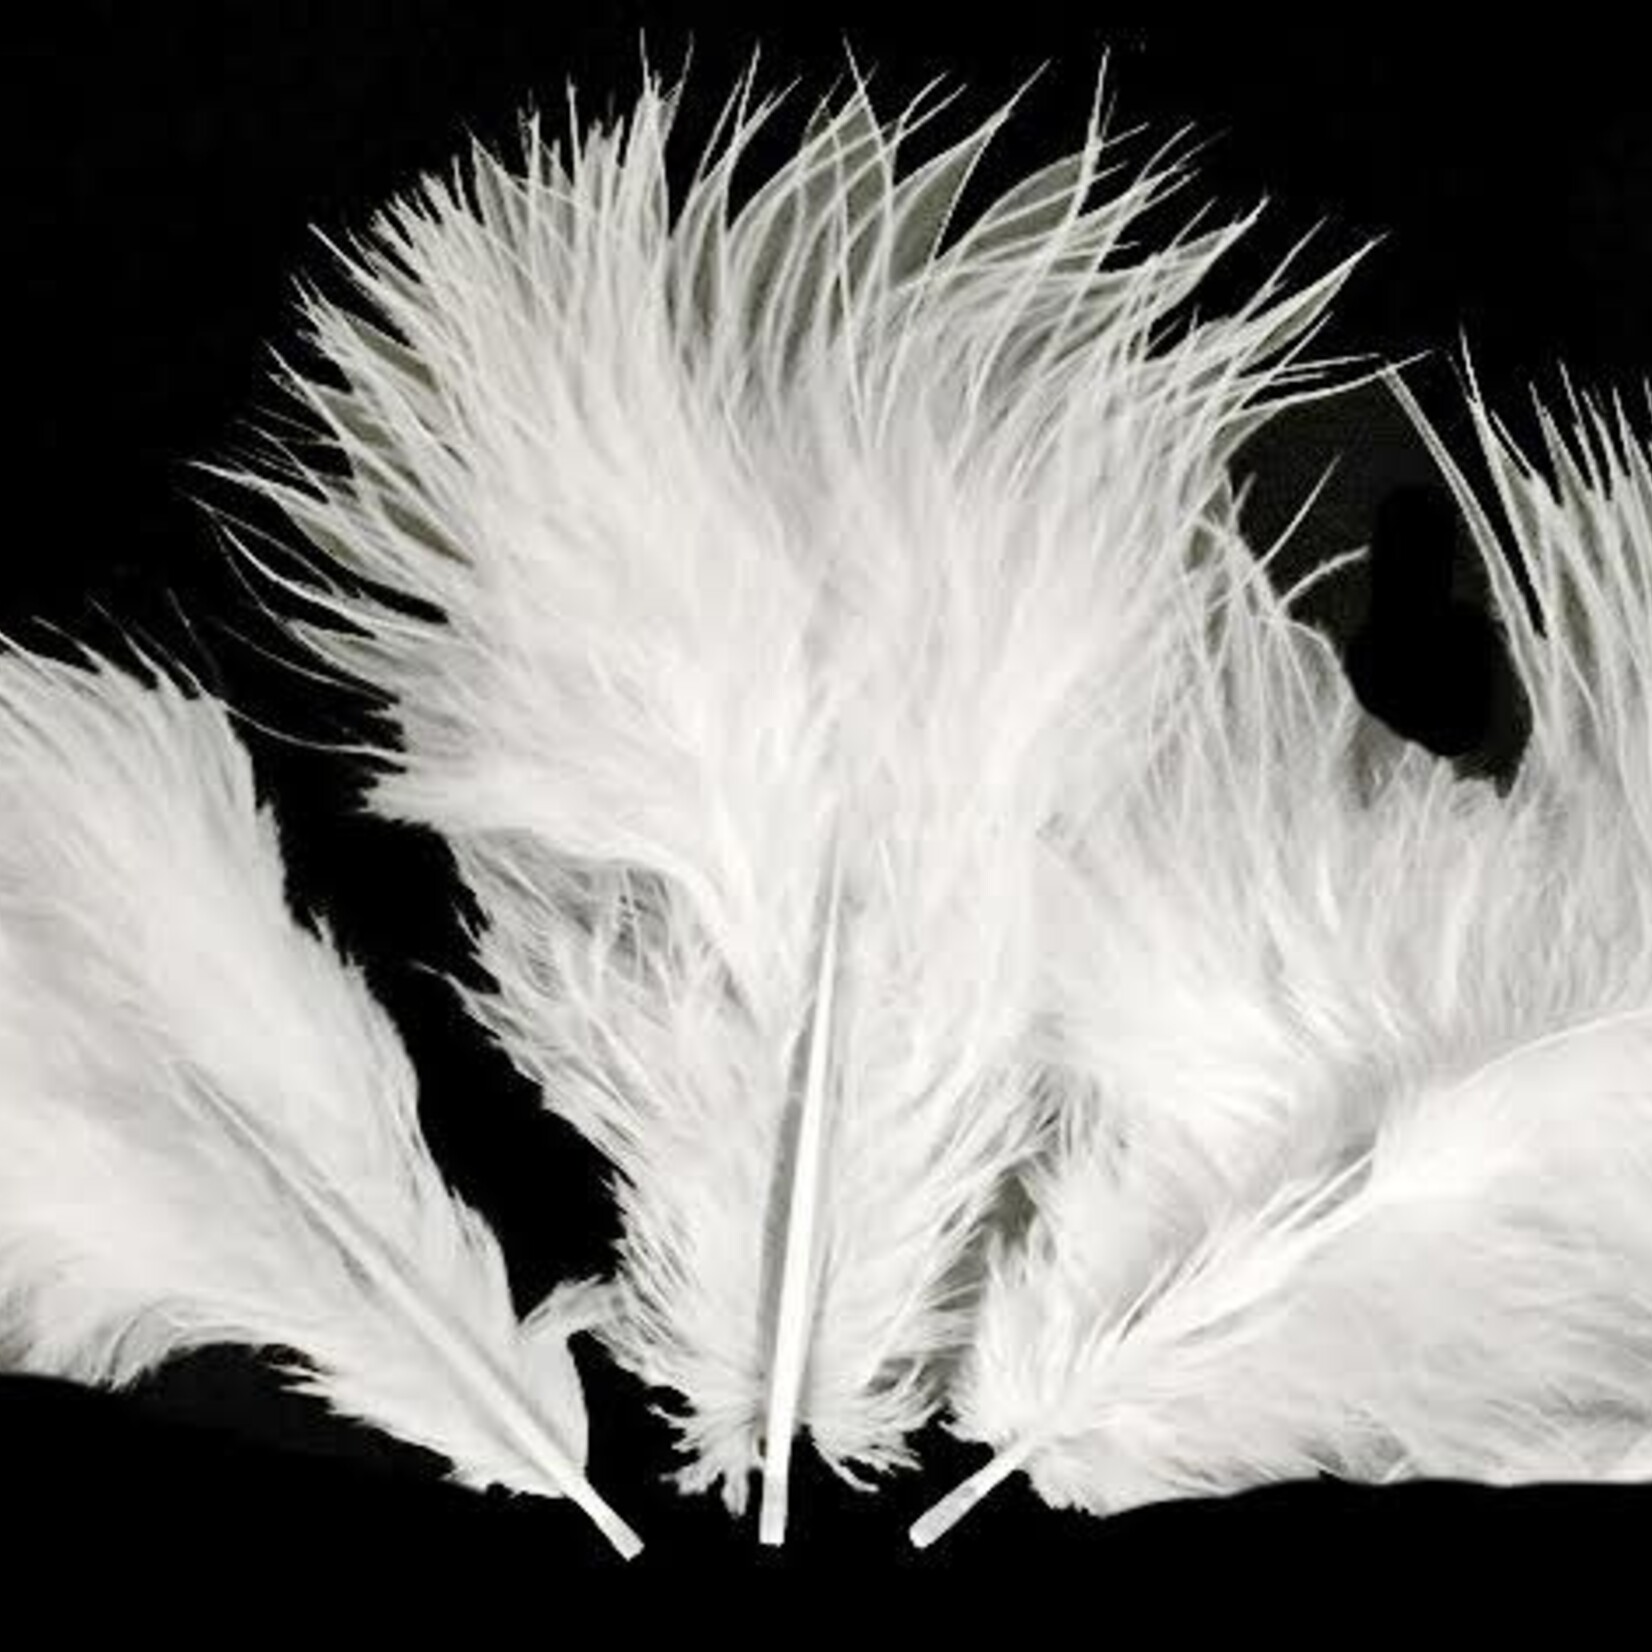 Marabou Fluff Feathers 4-7 Inch 1oz